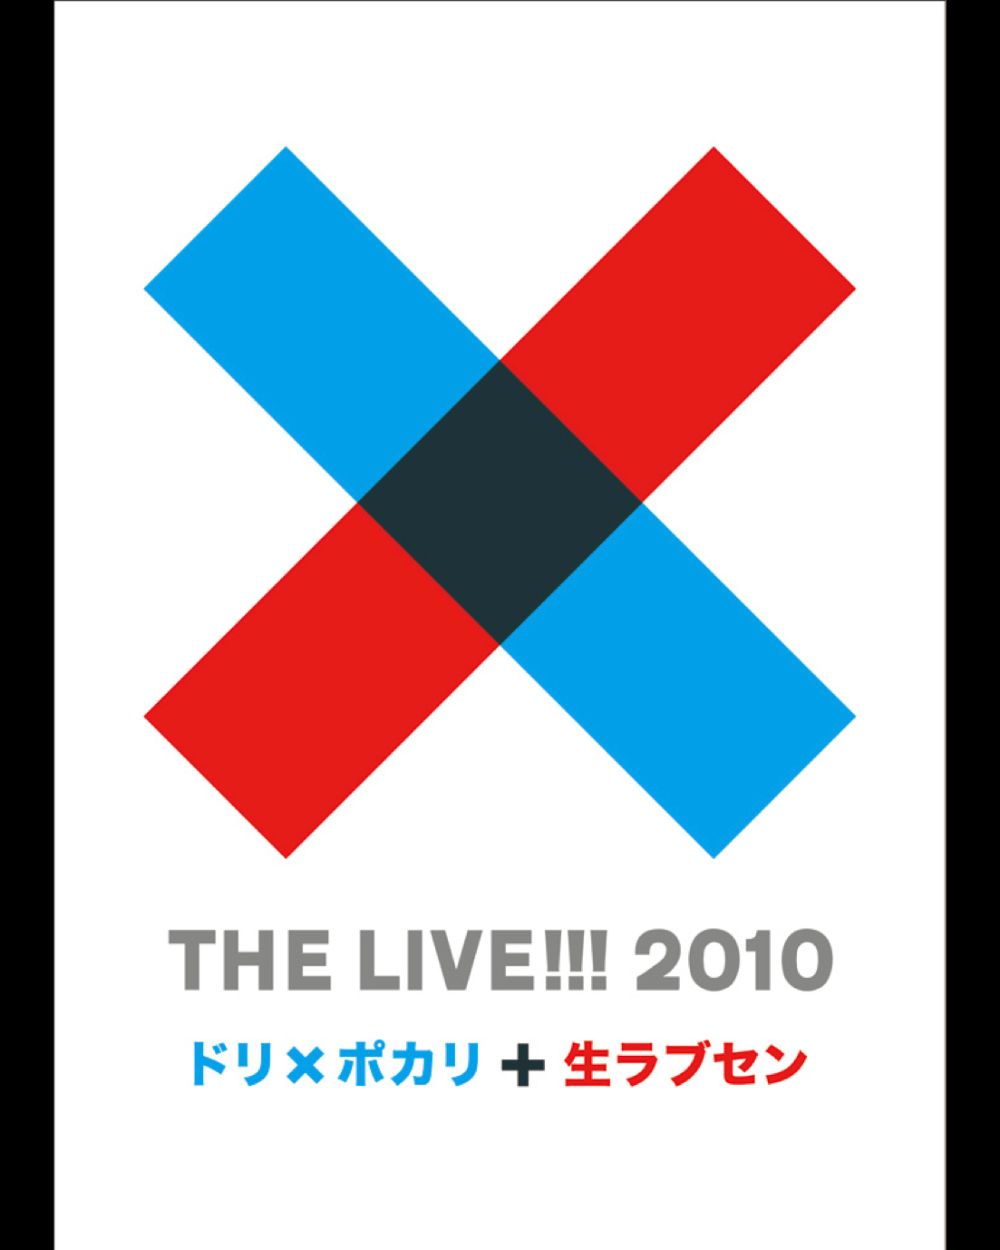 DREAMS COME TRUE【Blu-ray】THE LIVE!!! 2010 ドリ×ポカリ+生ラブセン